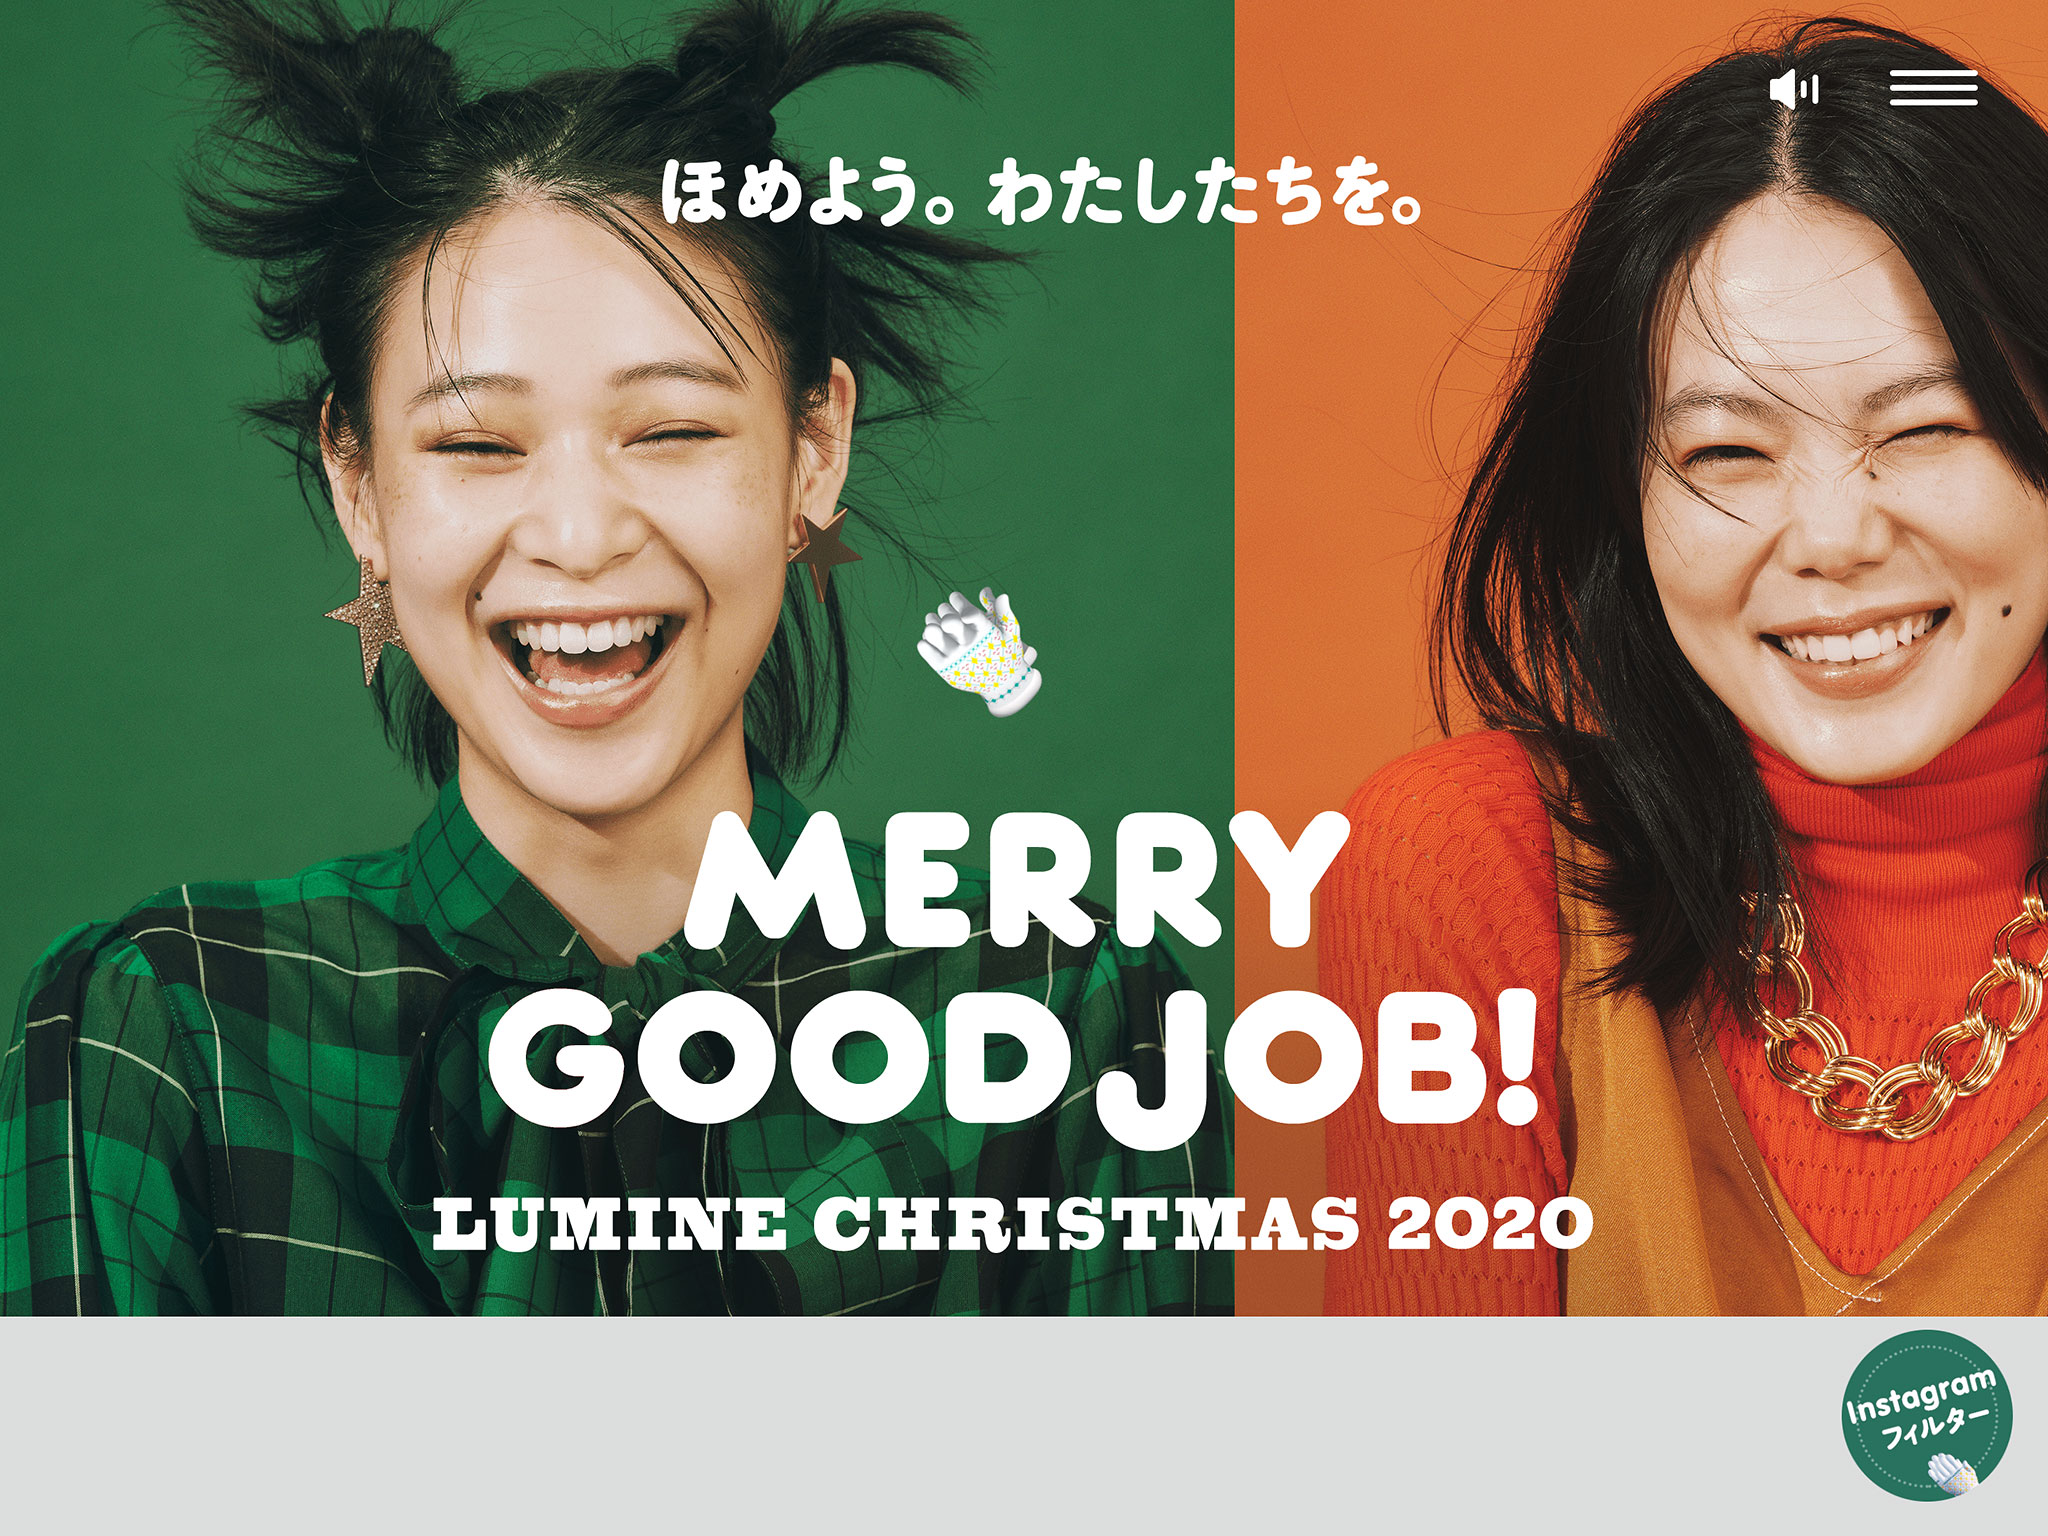 MERRY GOOD JOB! LUMINE CHRISTMAS 2020